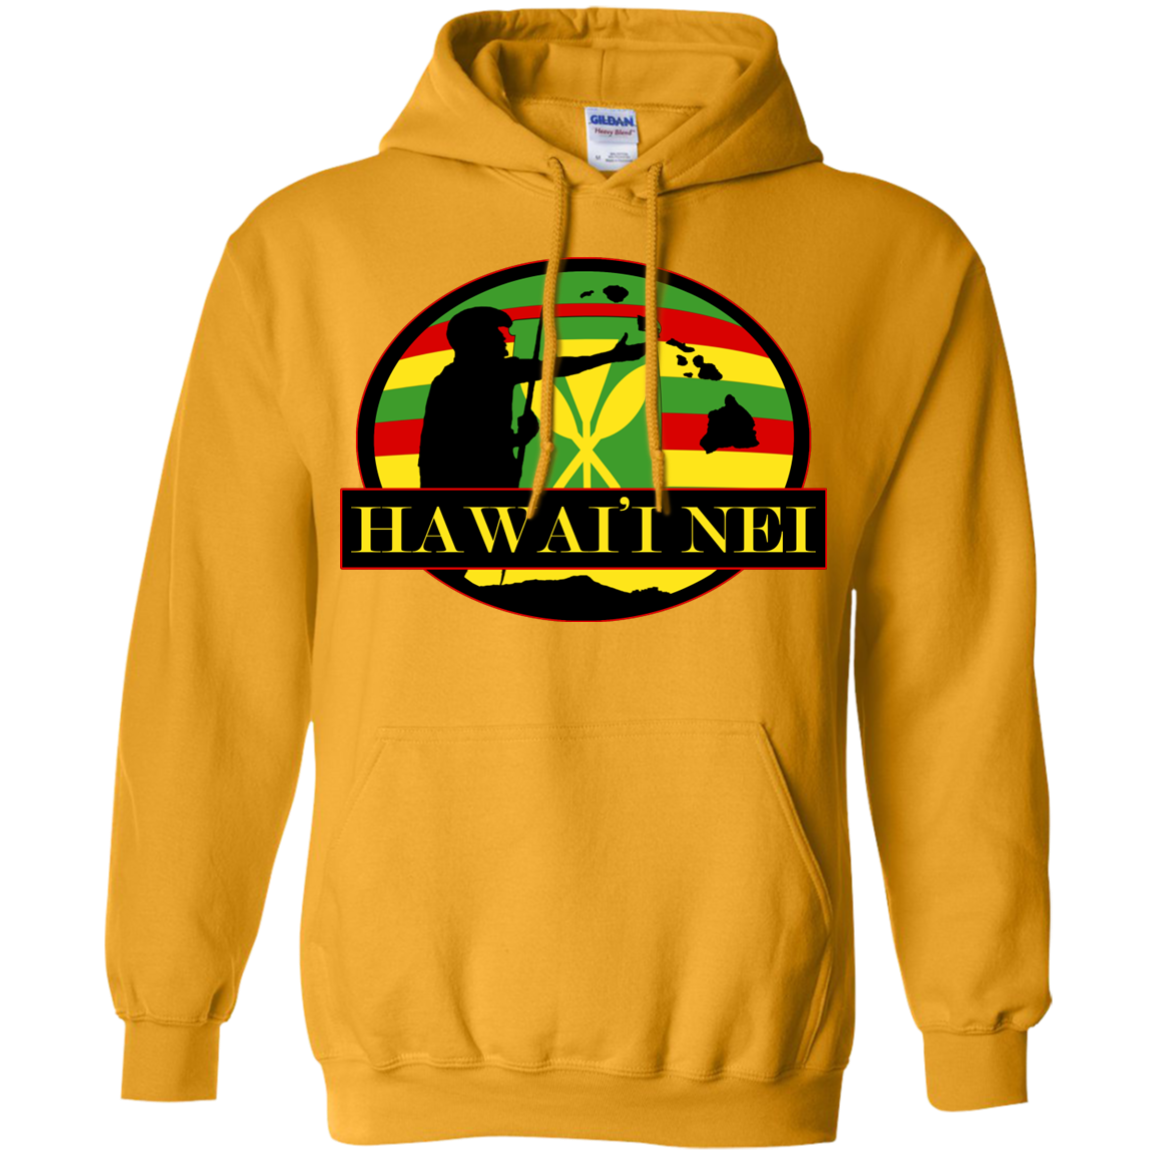 Hawai'i Nei Kanaka Maoli Pullover Hoodie - Hawaii Nei All Day